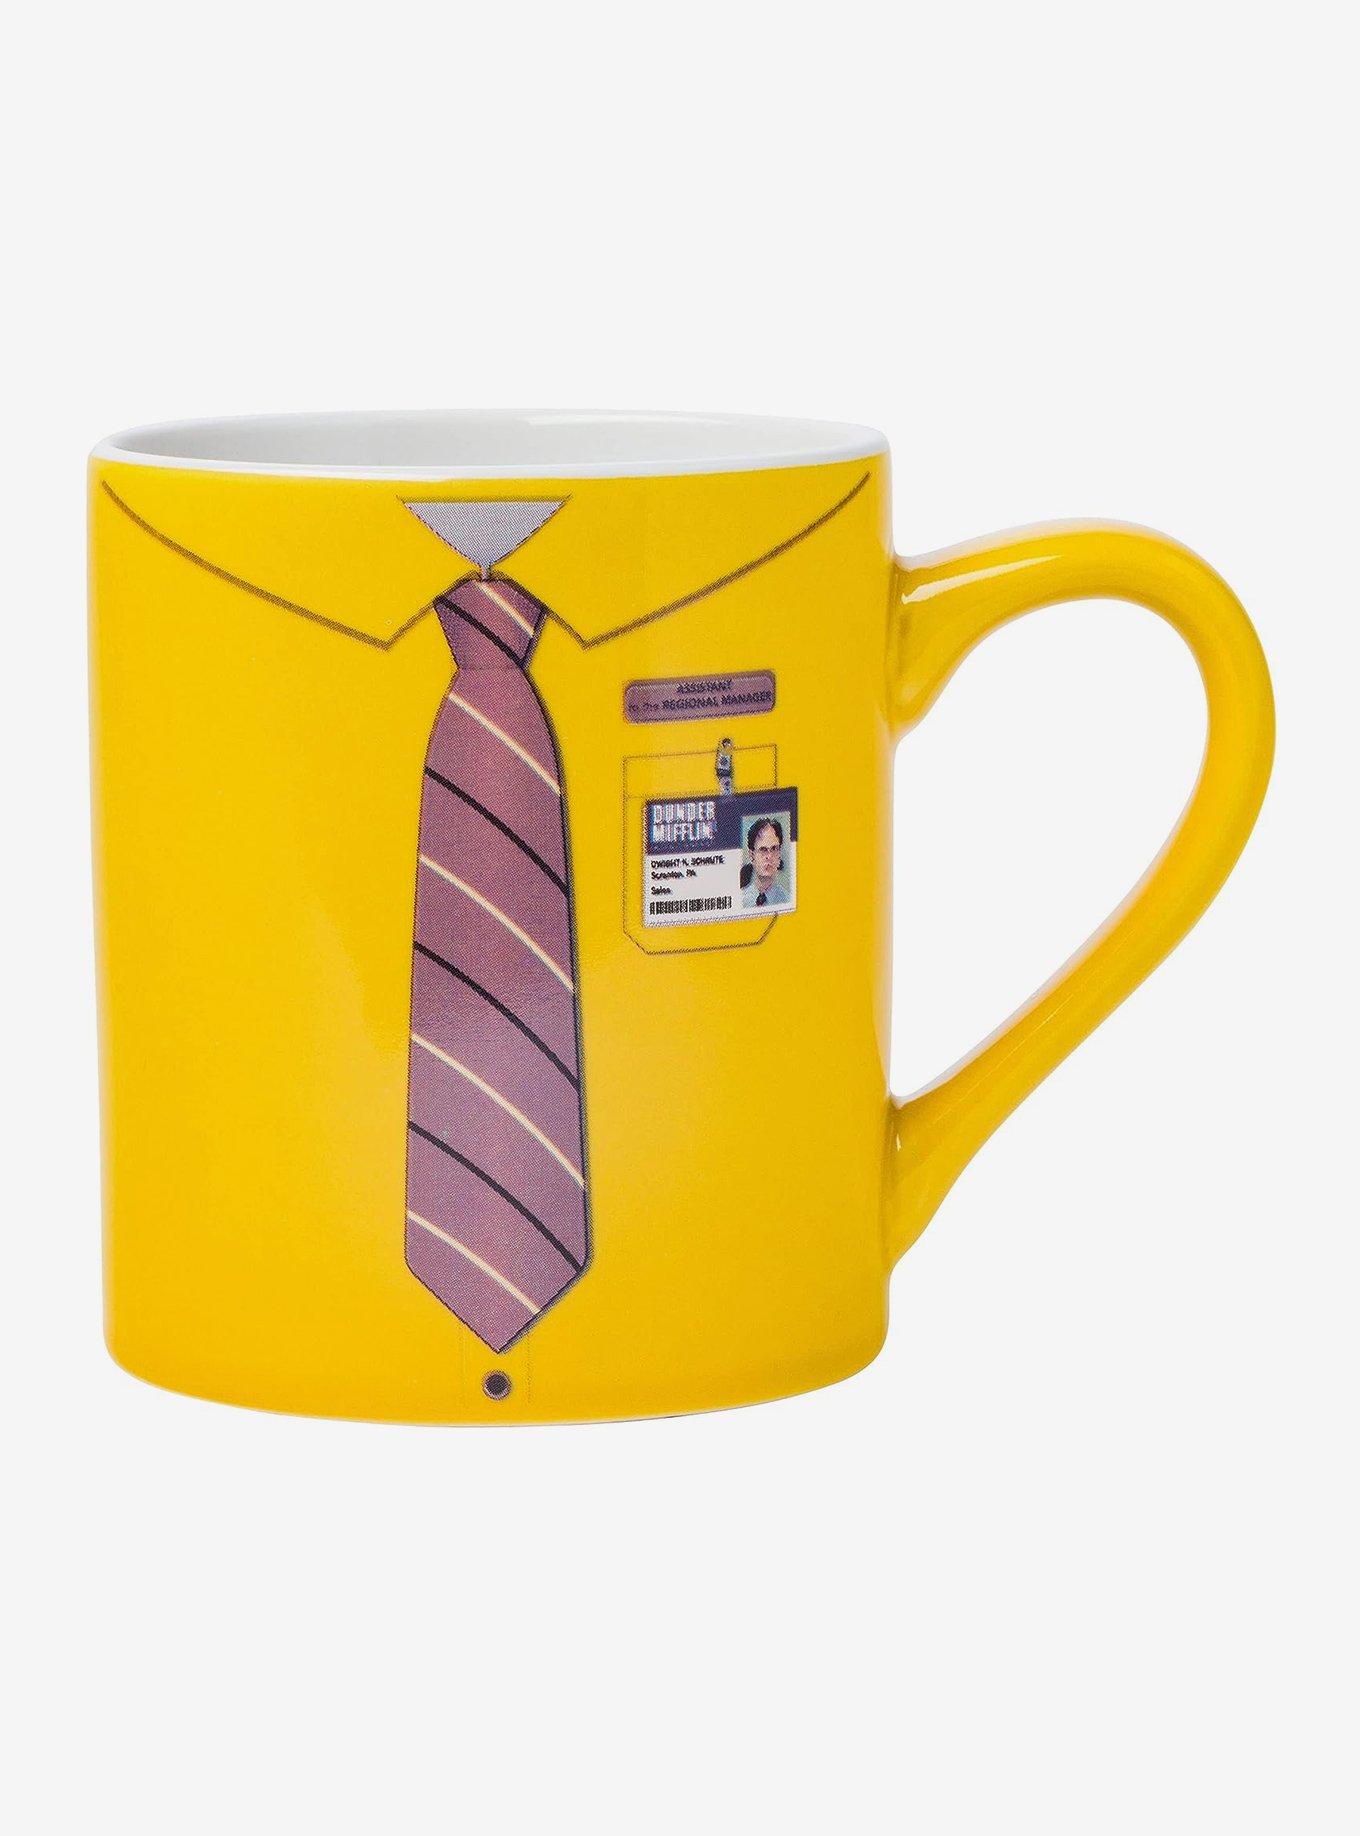 The Office Dwight Shirt Mug, , hi-res